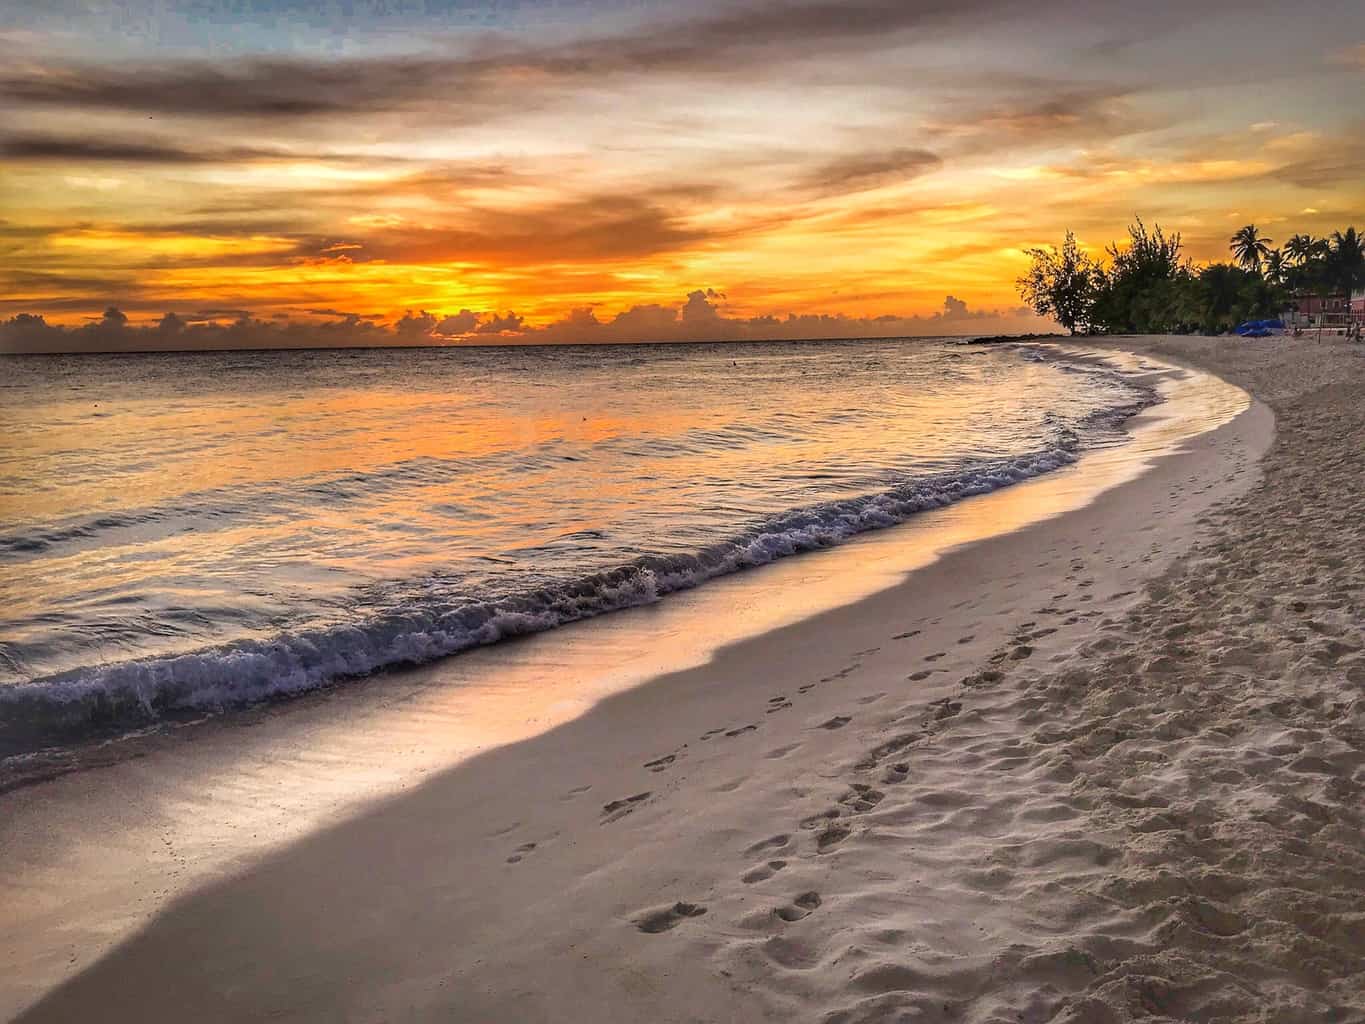  Dover Beach, Barbados by Travel Photographer Rick McEvoy Photography 